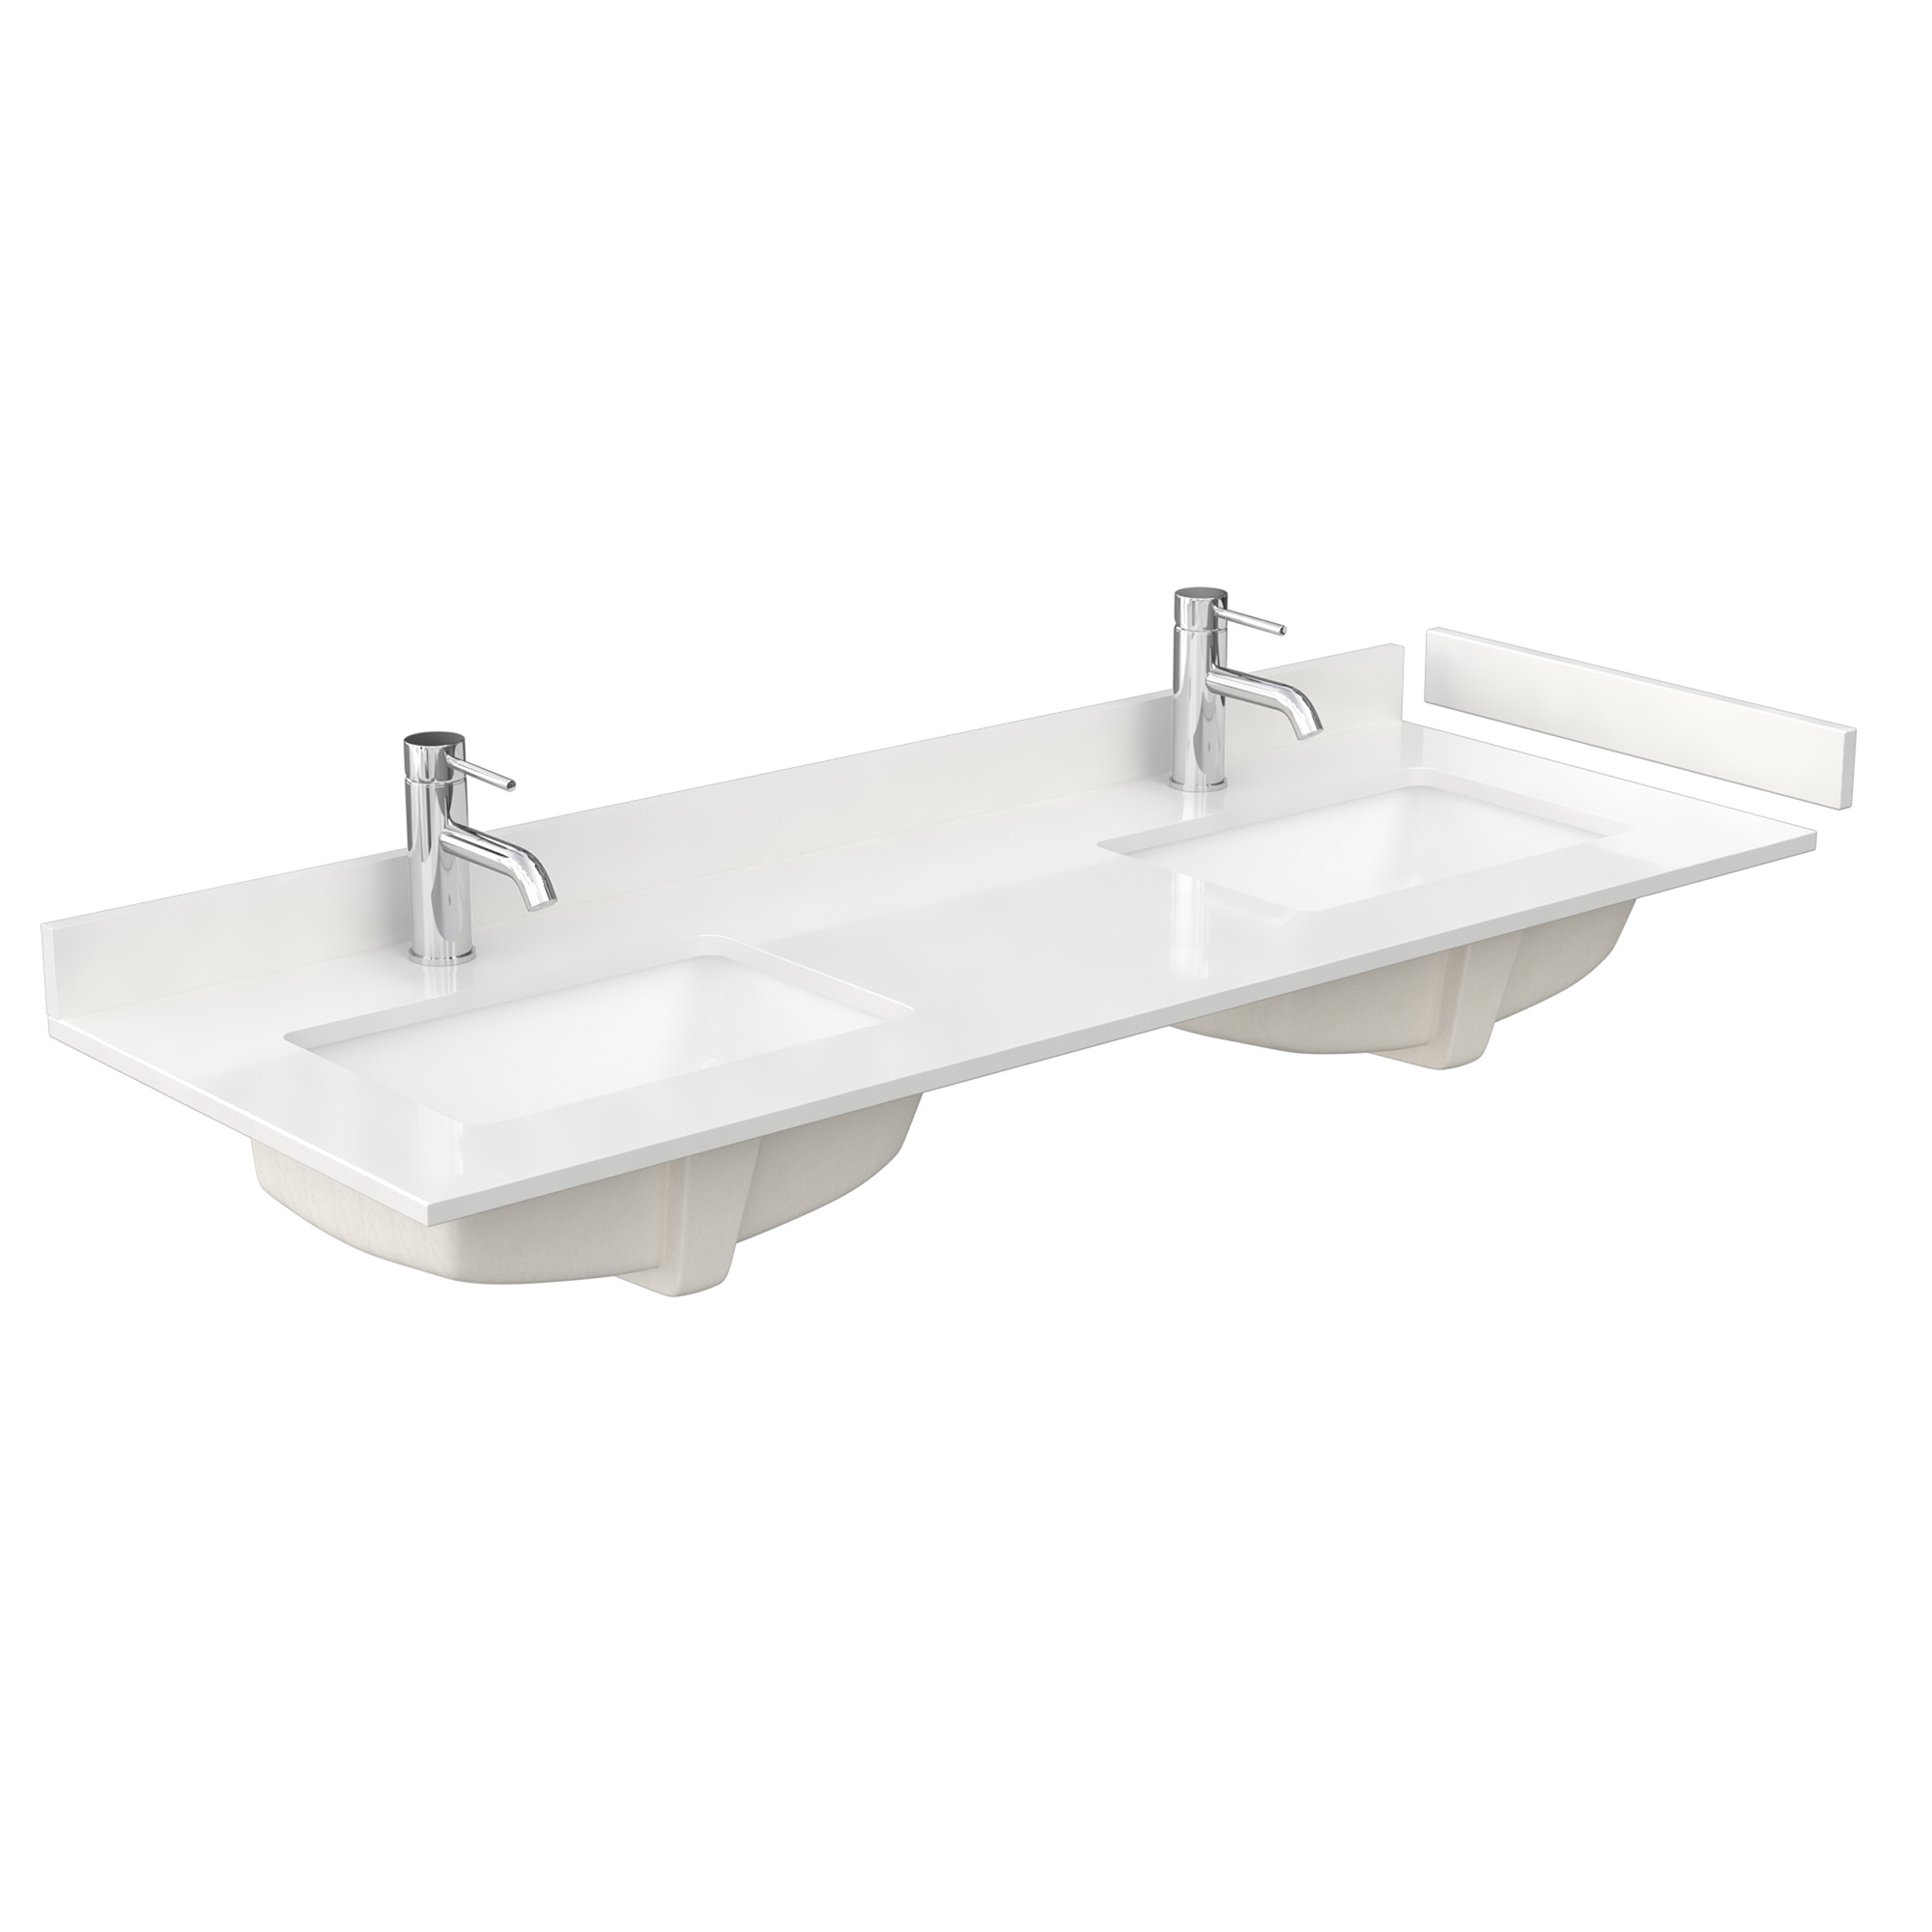 60" Double Countertop - White Quartz (1000) with Undermount Square Sinks (1-Hole) - Includes Backsplash and Sidesplash WCFQC160DTOPUNSWQ